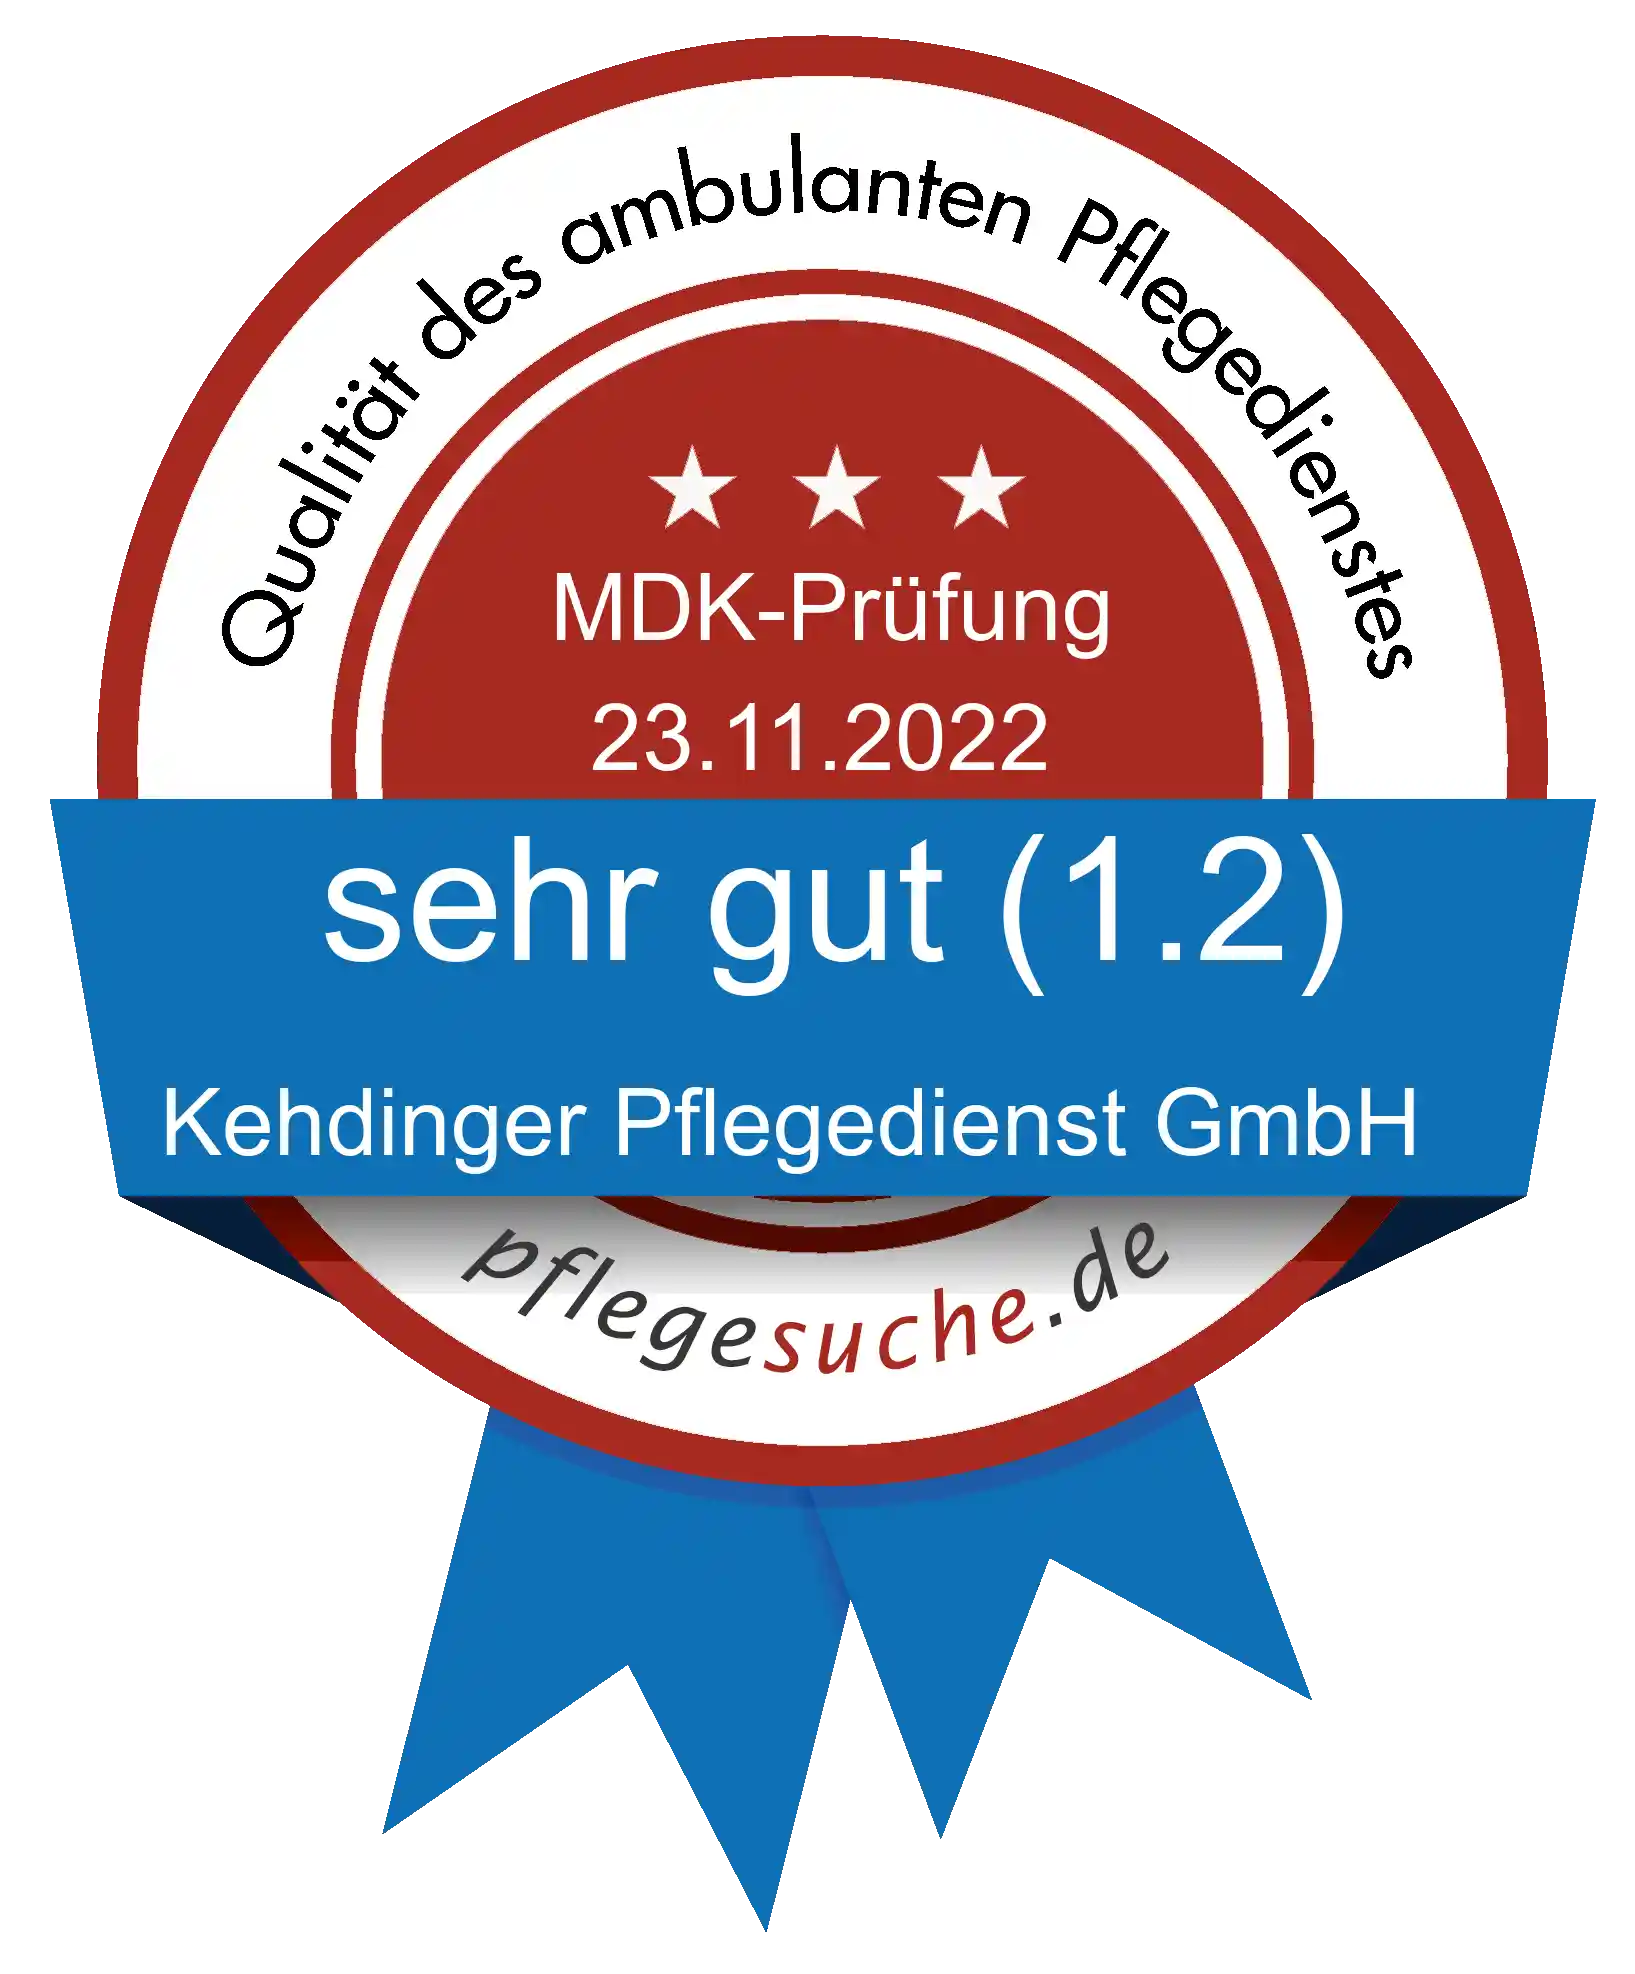 Siegel Benotung: Kehdinger Pflegedienst GmbH